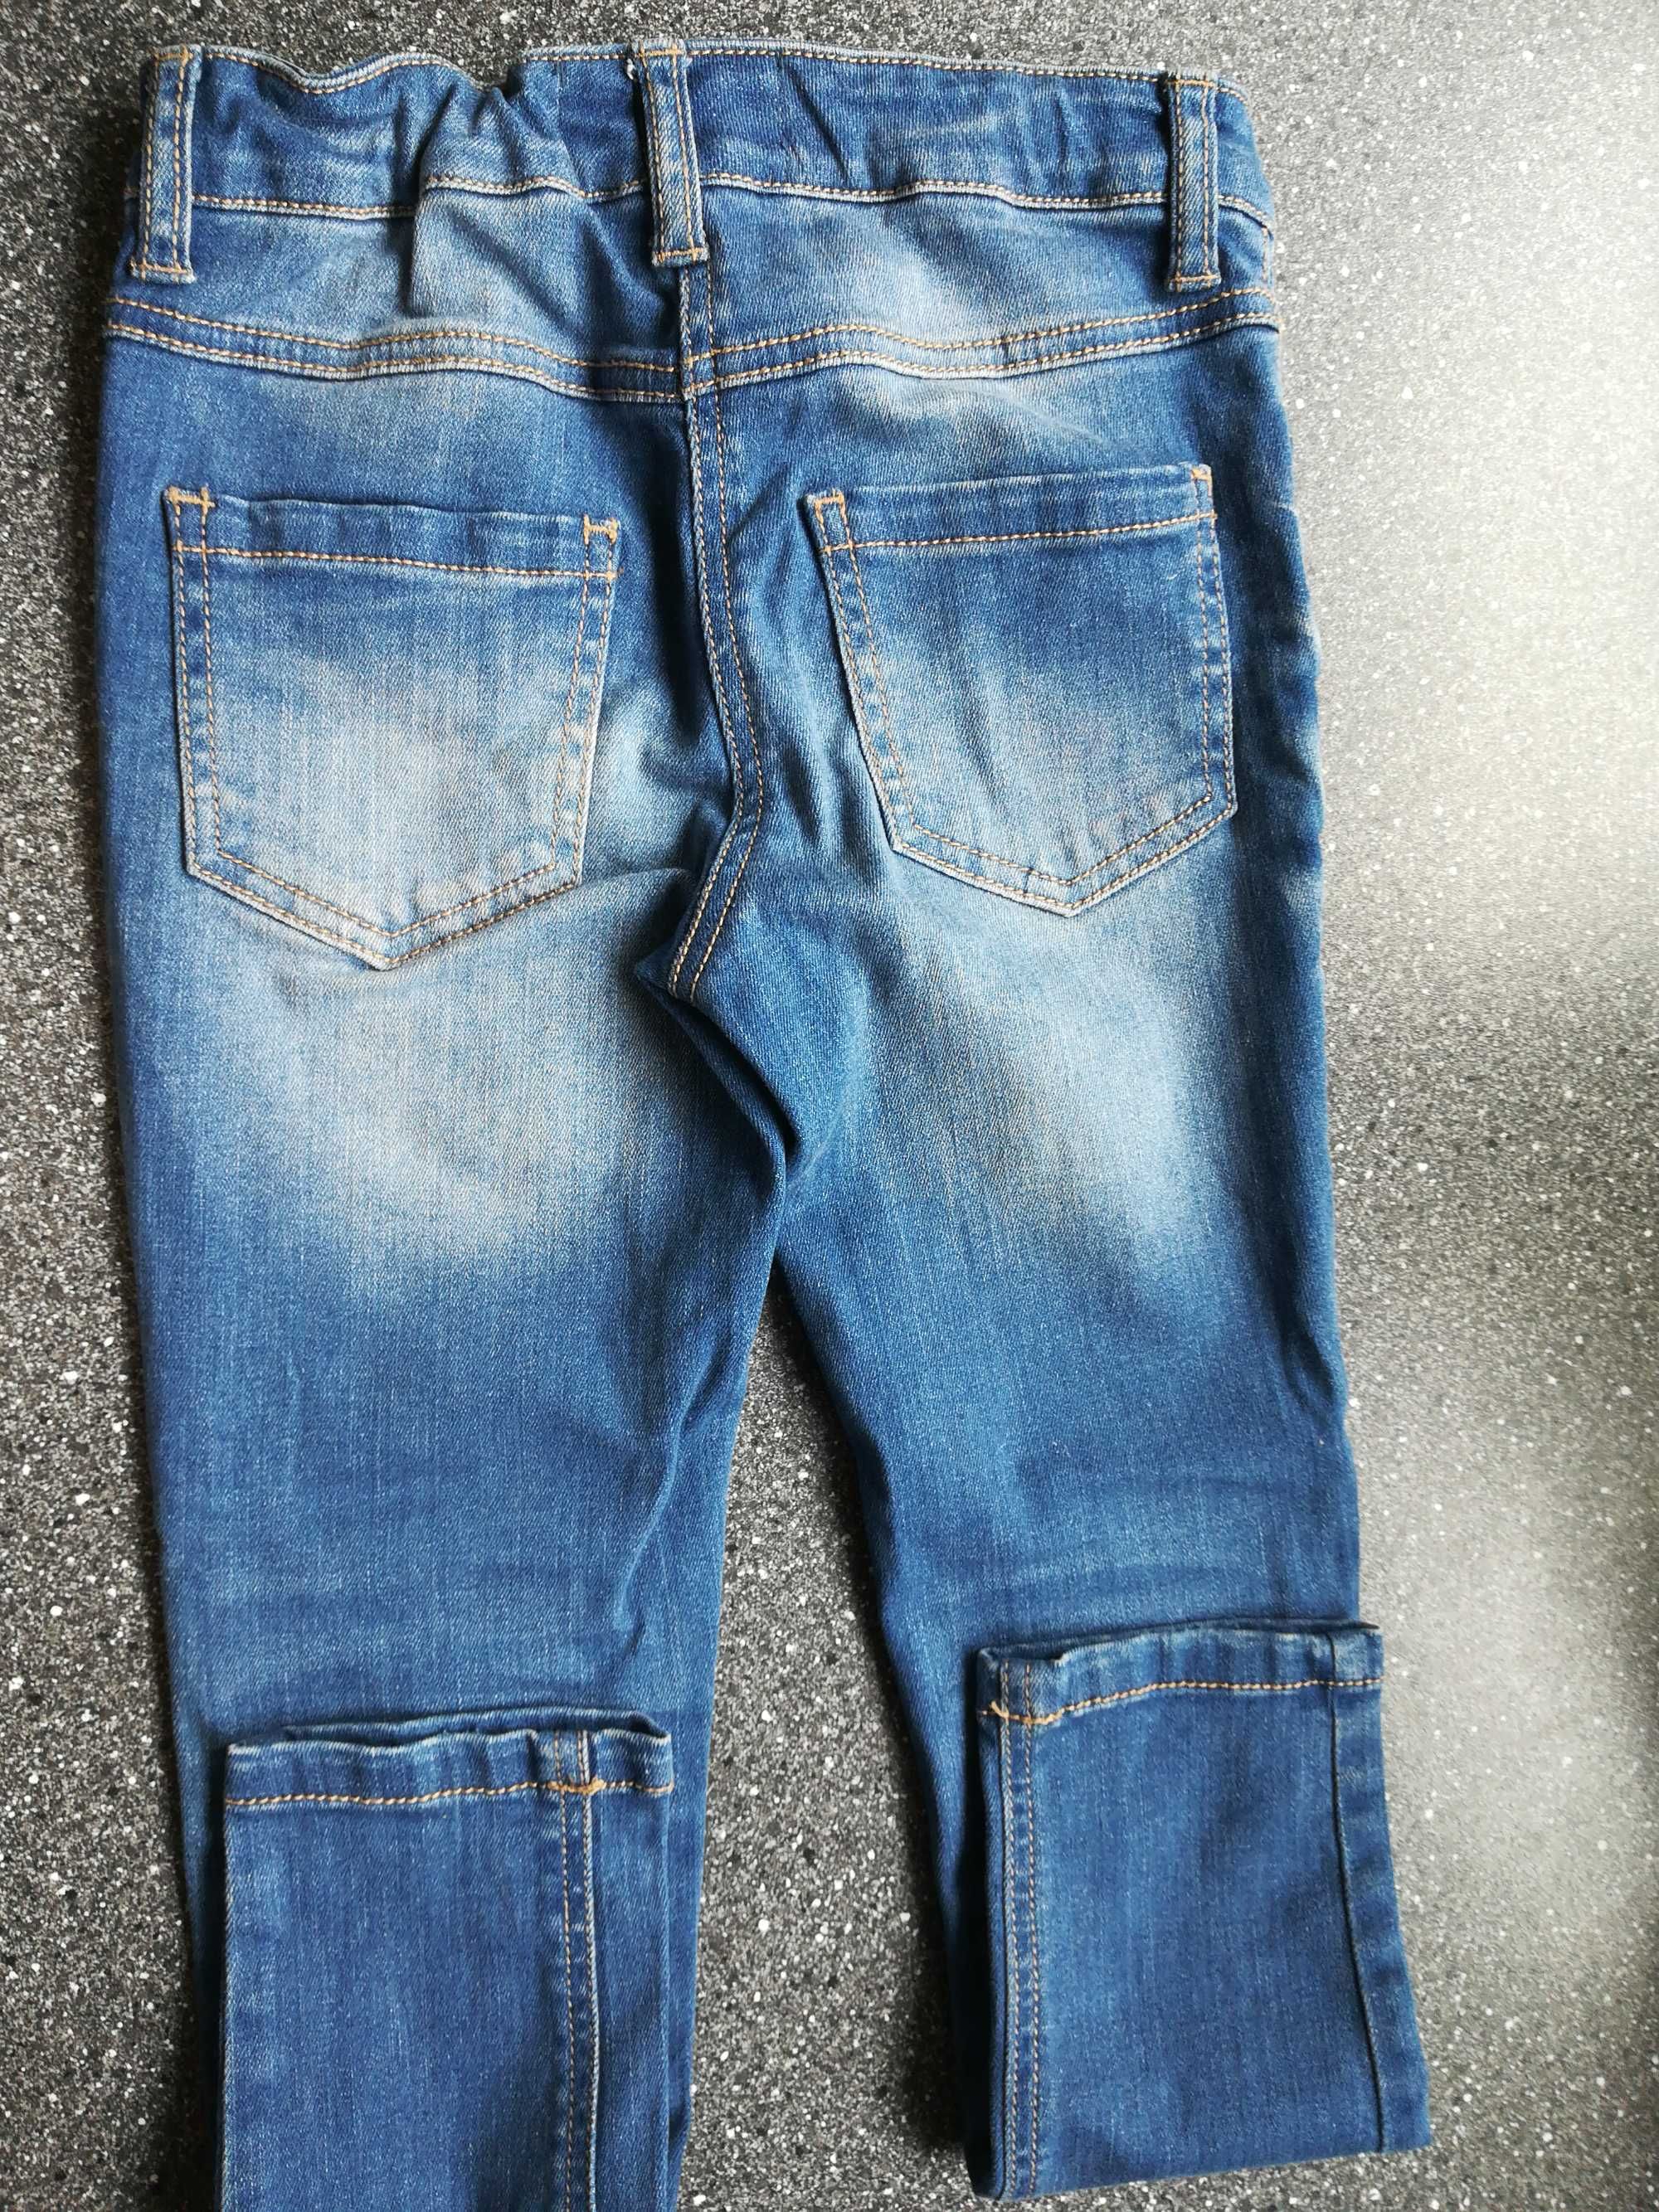 Spodnie jeansy 122 kamienie dżety